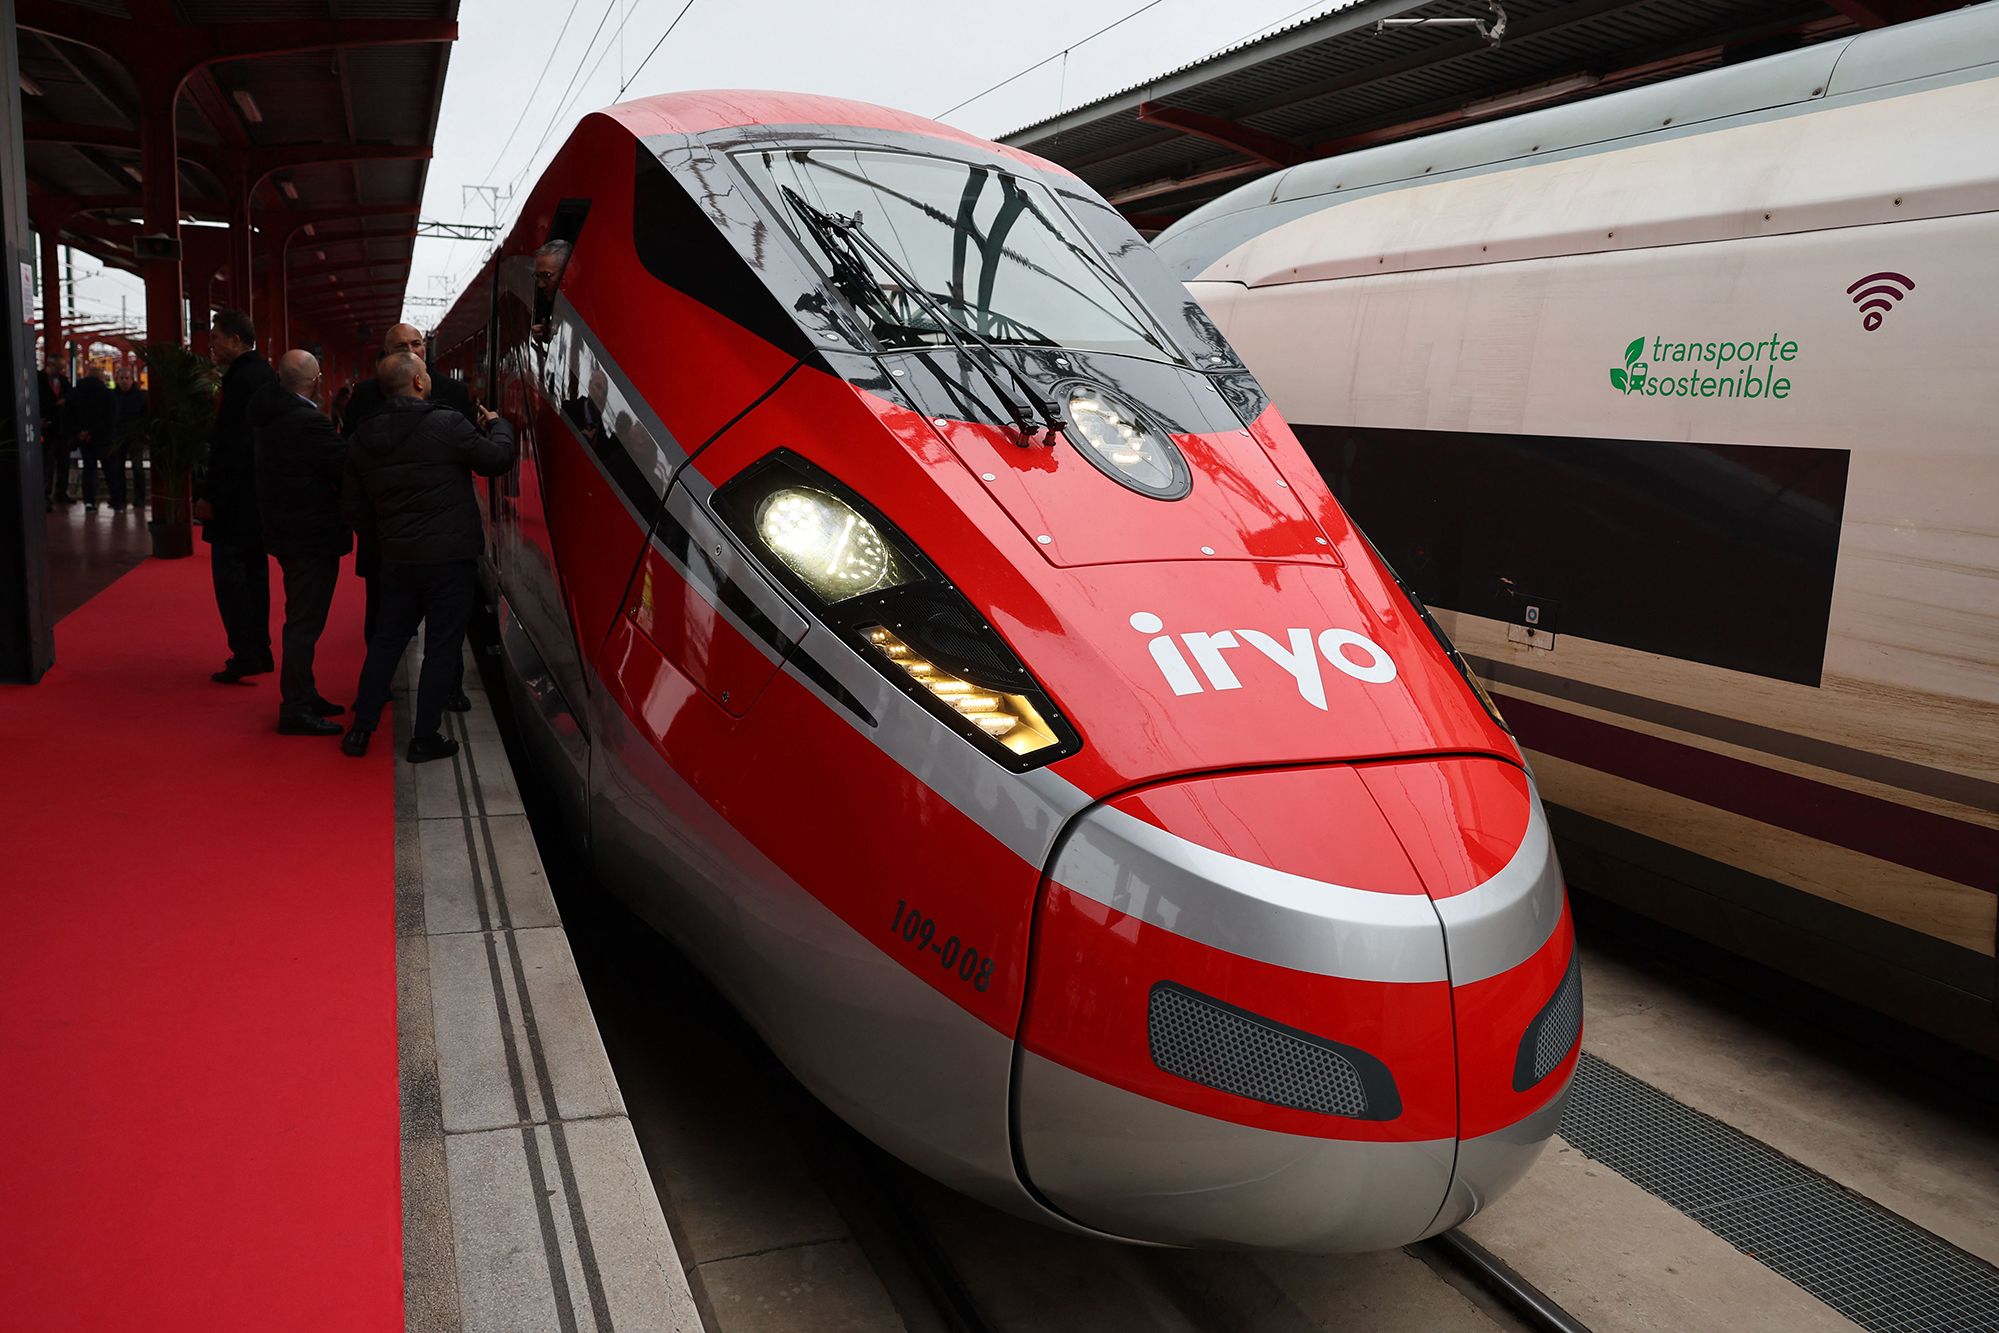 Bryde igennem ordningen ler Iryo: Spain's new high-speed trains make it Europe's rail capital | CNN